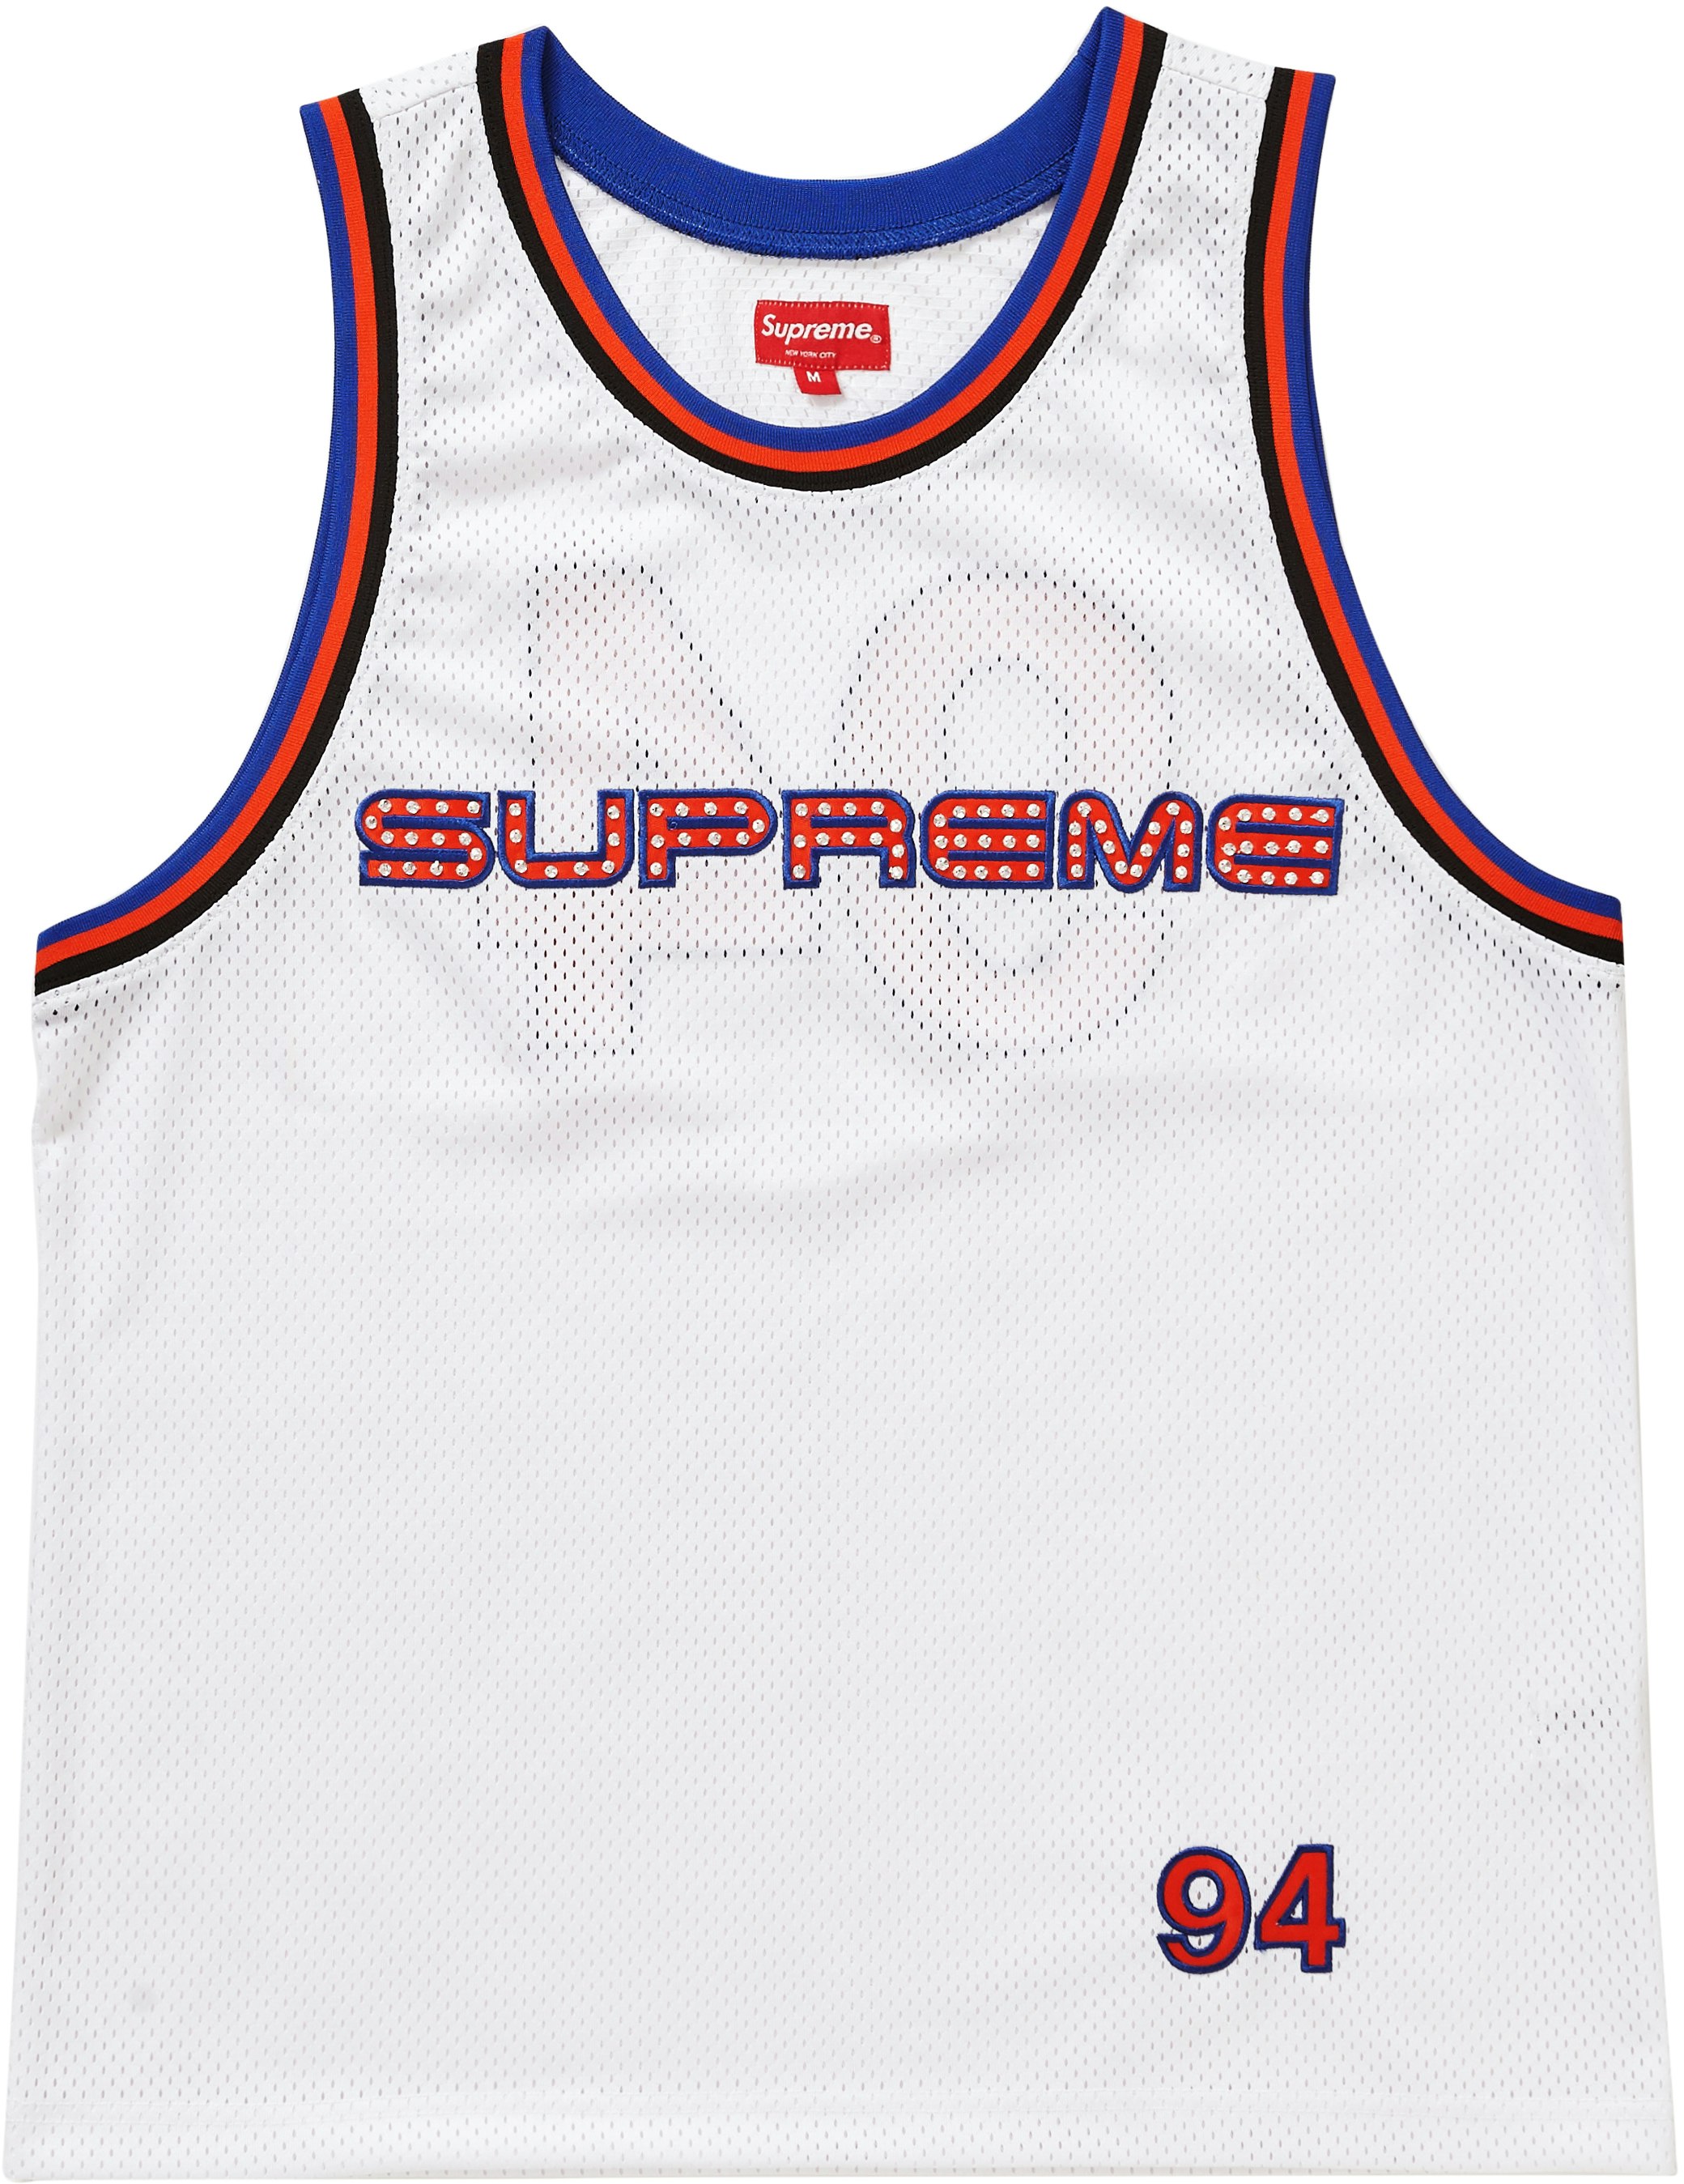 Supreme St. Supreme Basketball Jersey White - Novelship